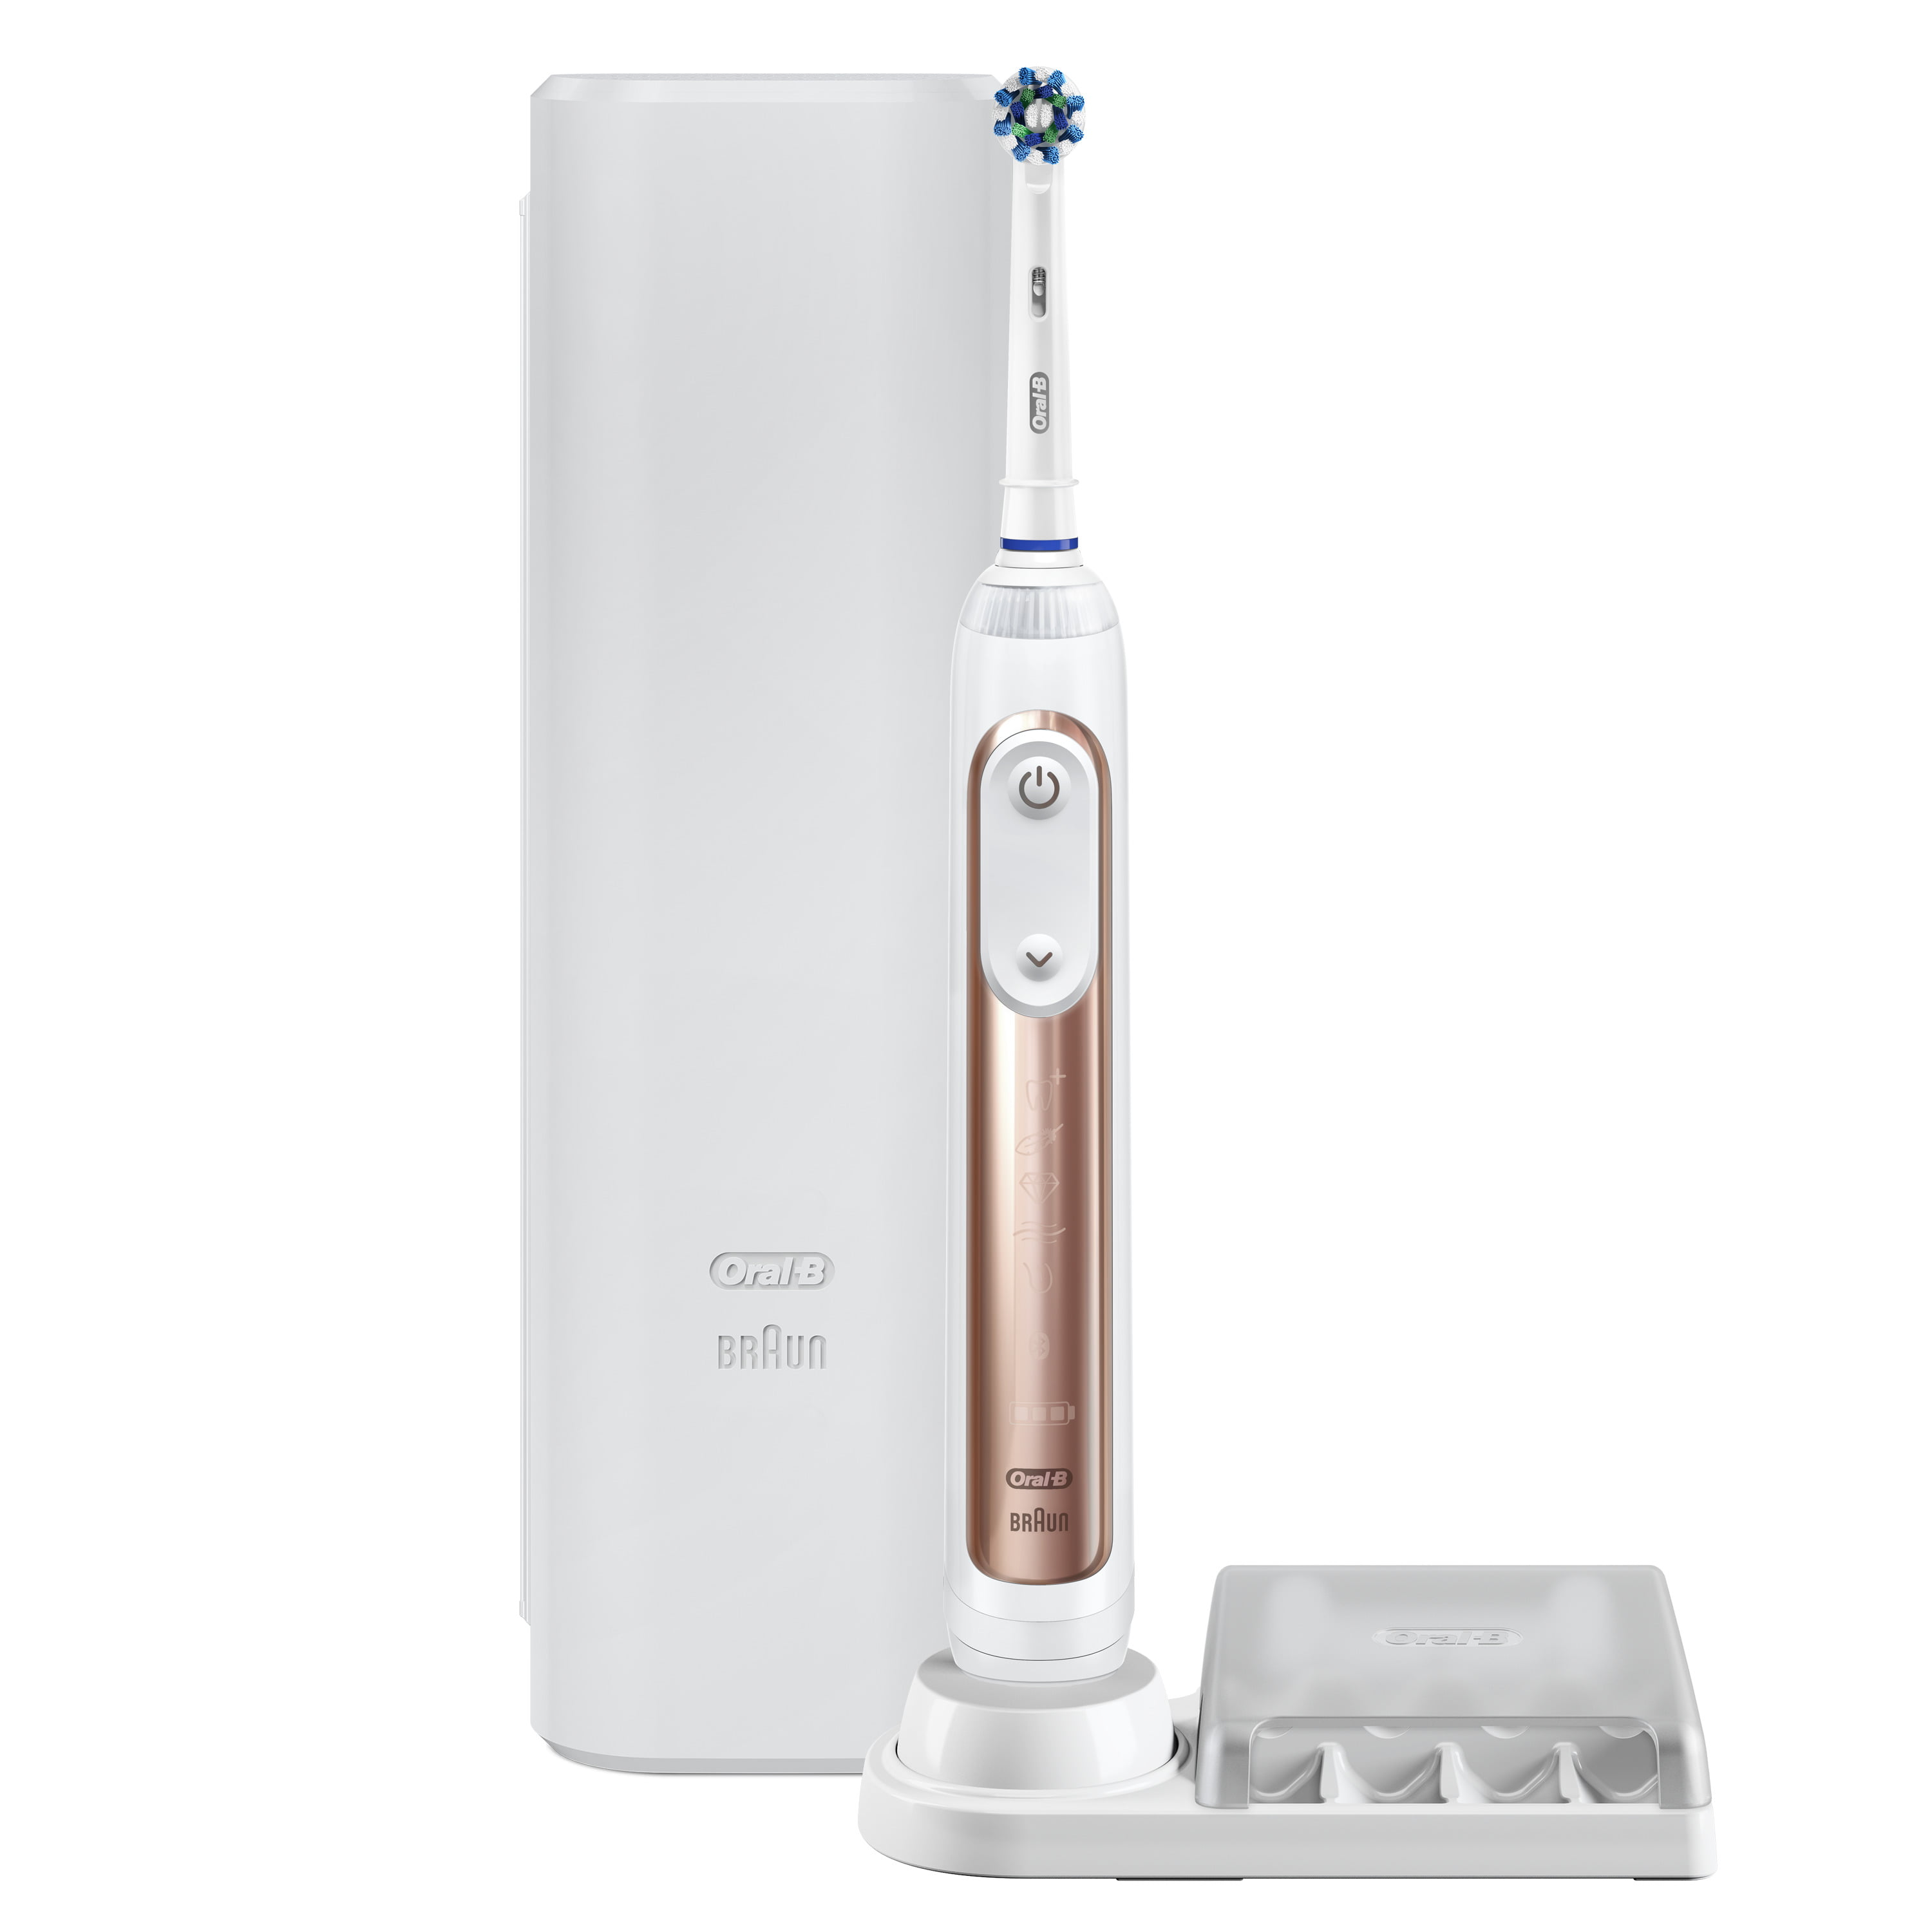 oral-b-6000-smartseries-electric-toothbrush-powered-by-braun-rose